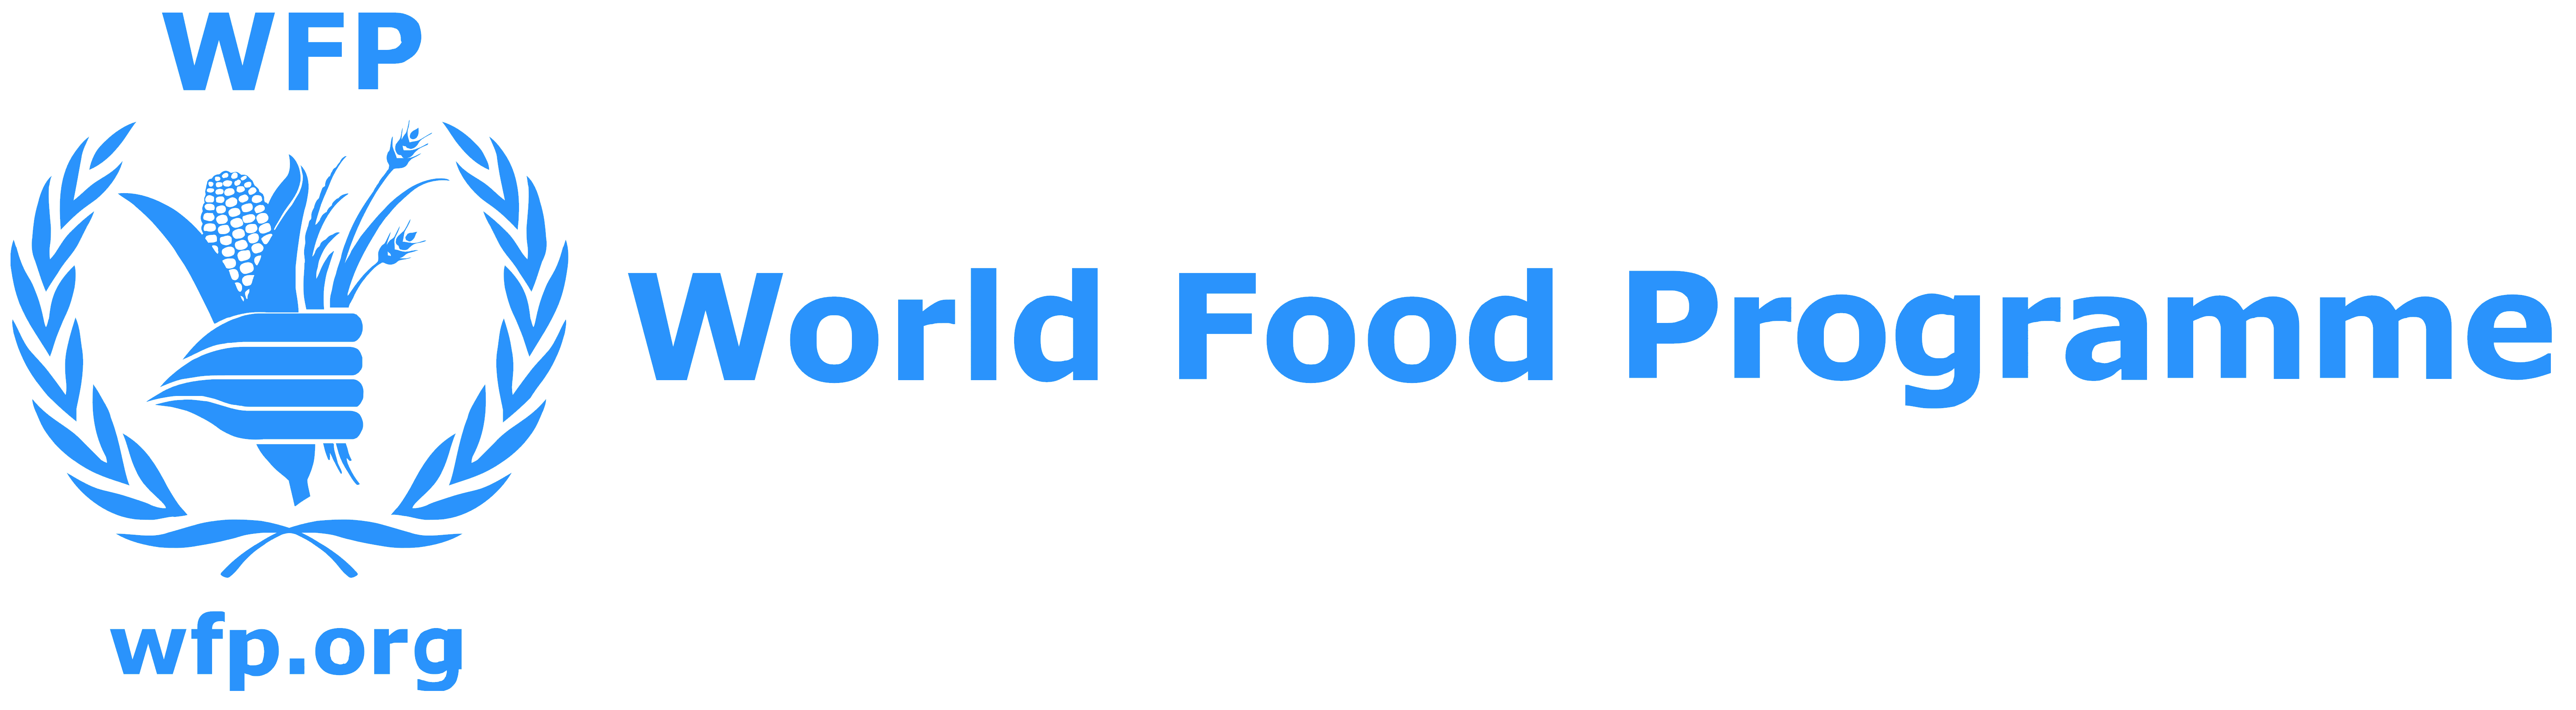 WFP (World Food Programme) – Logos Download